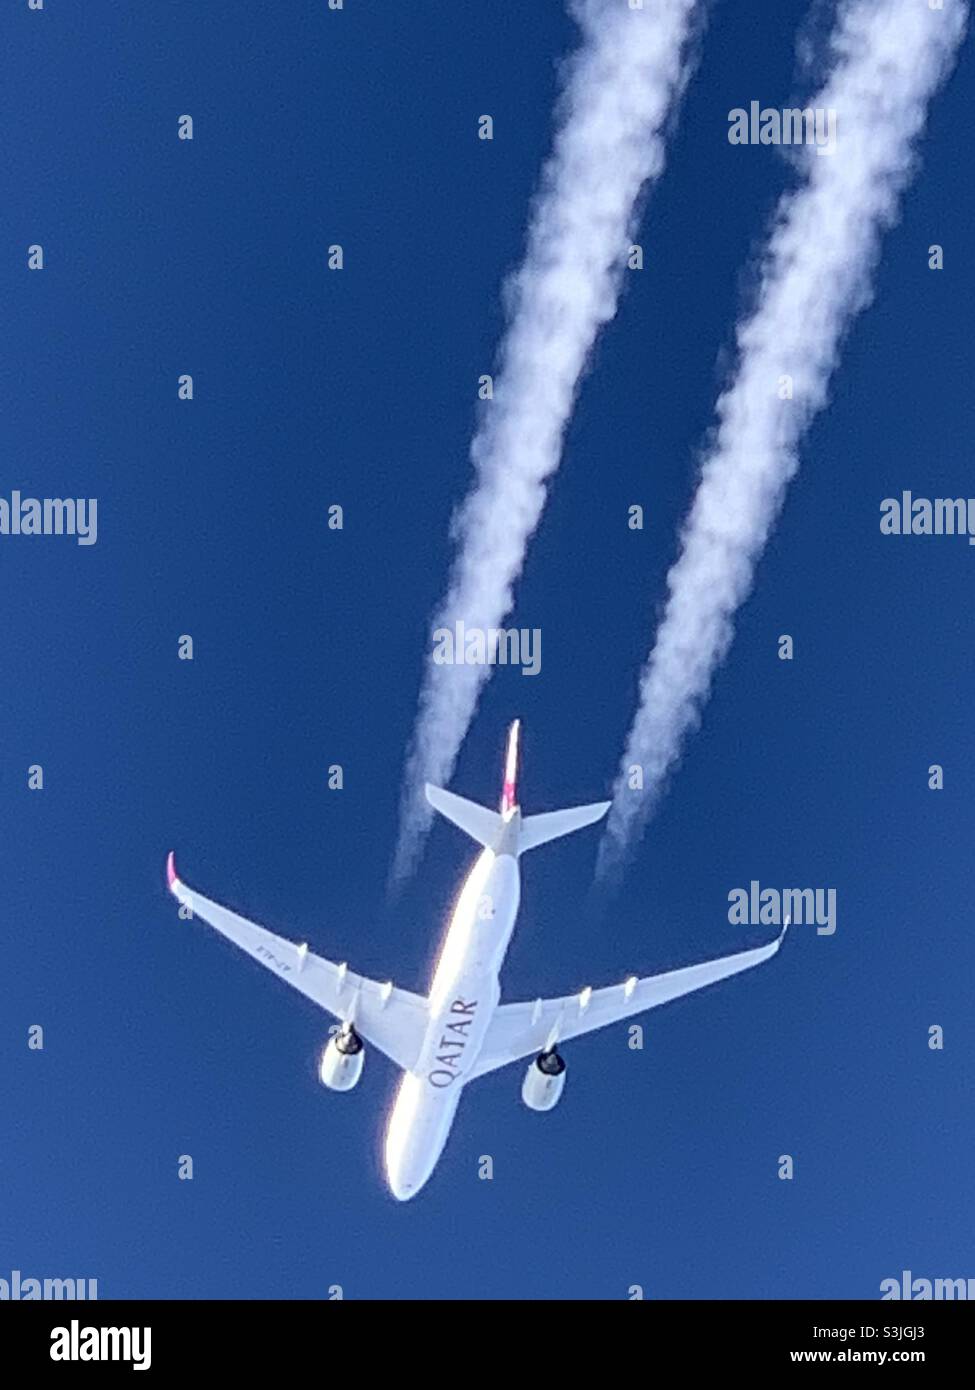 Qatar airways plane Stock Photo